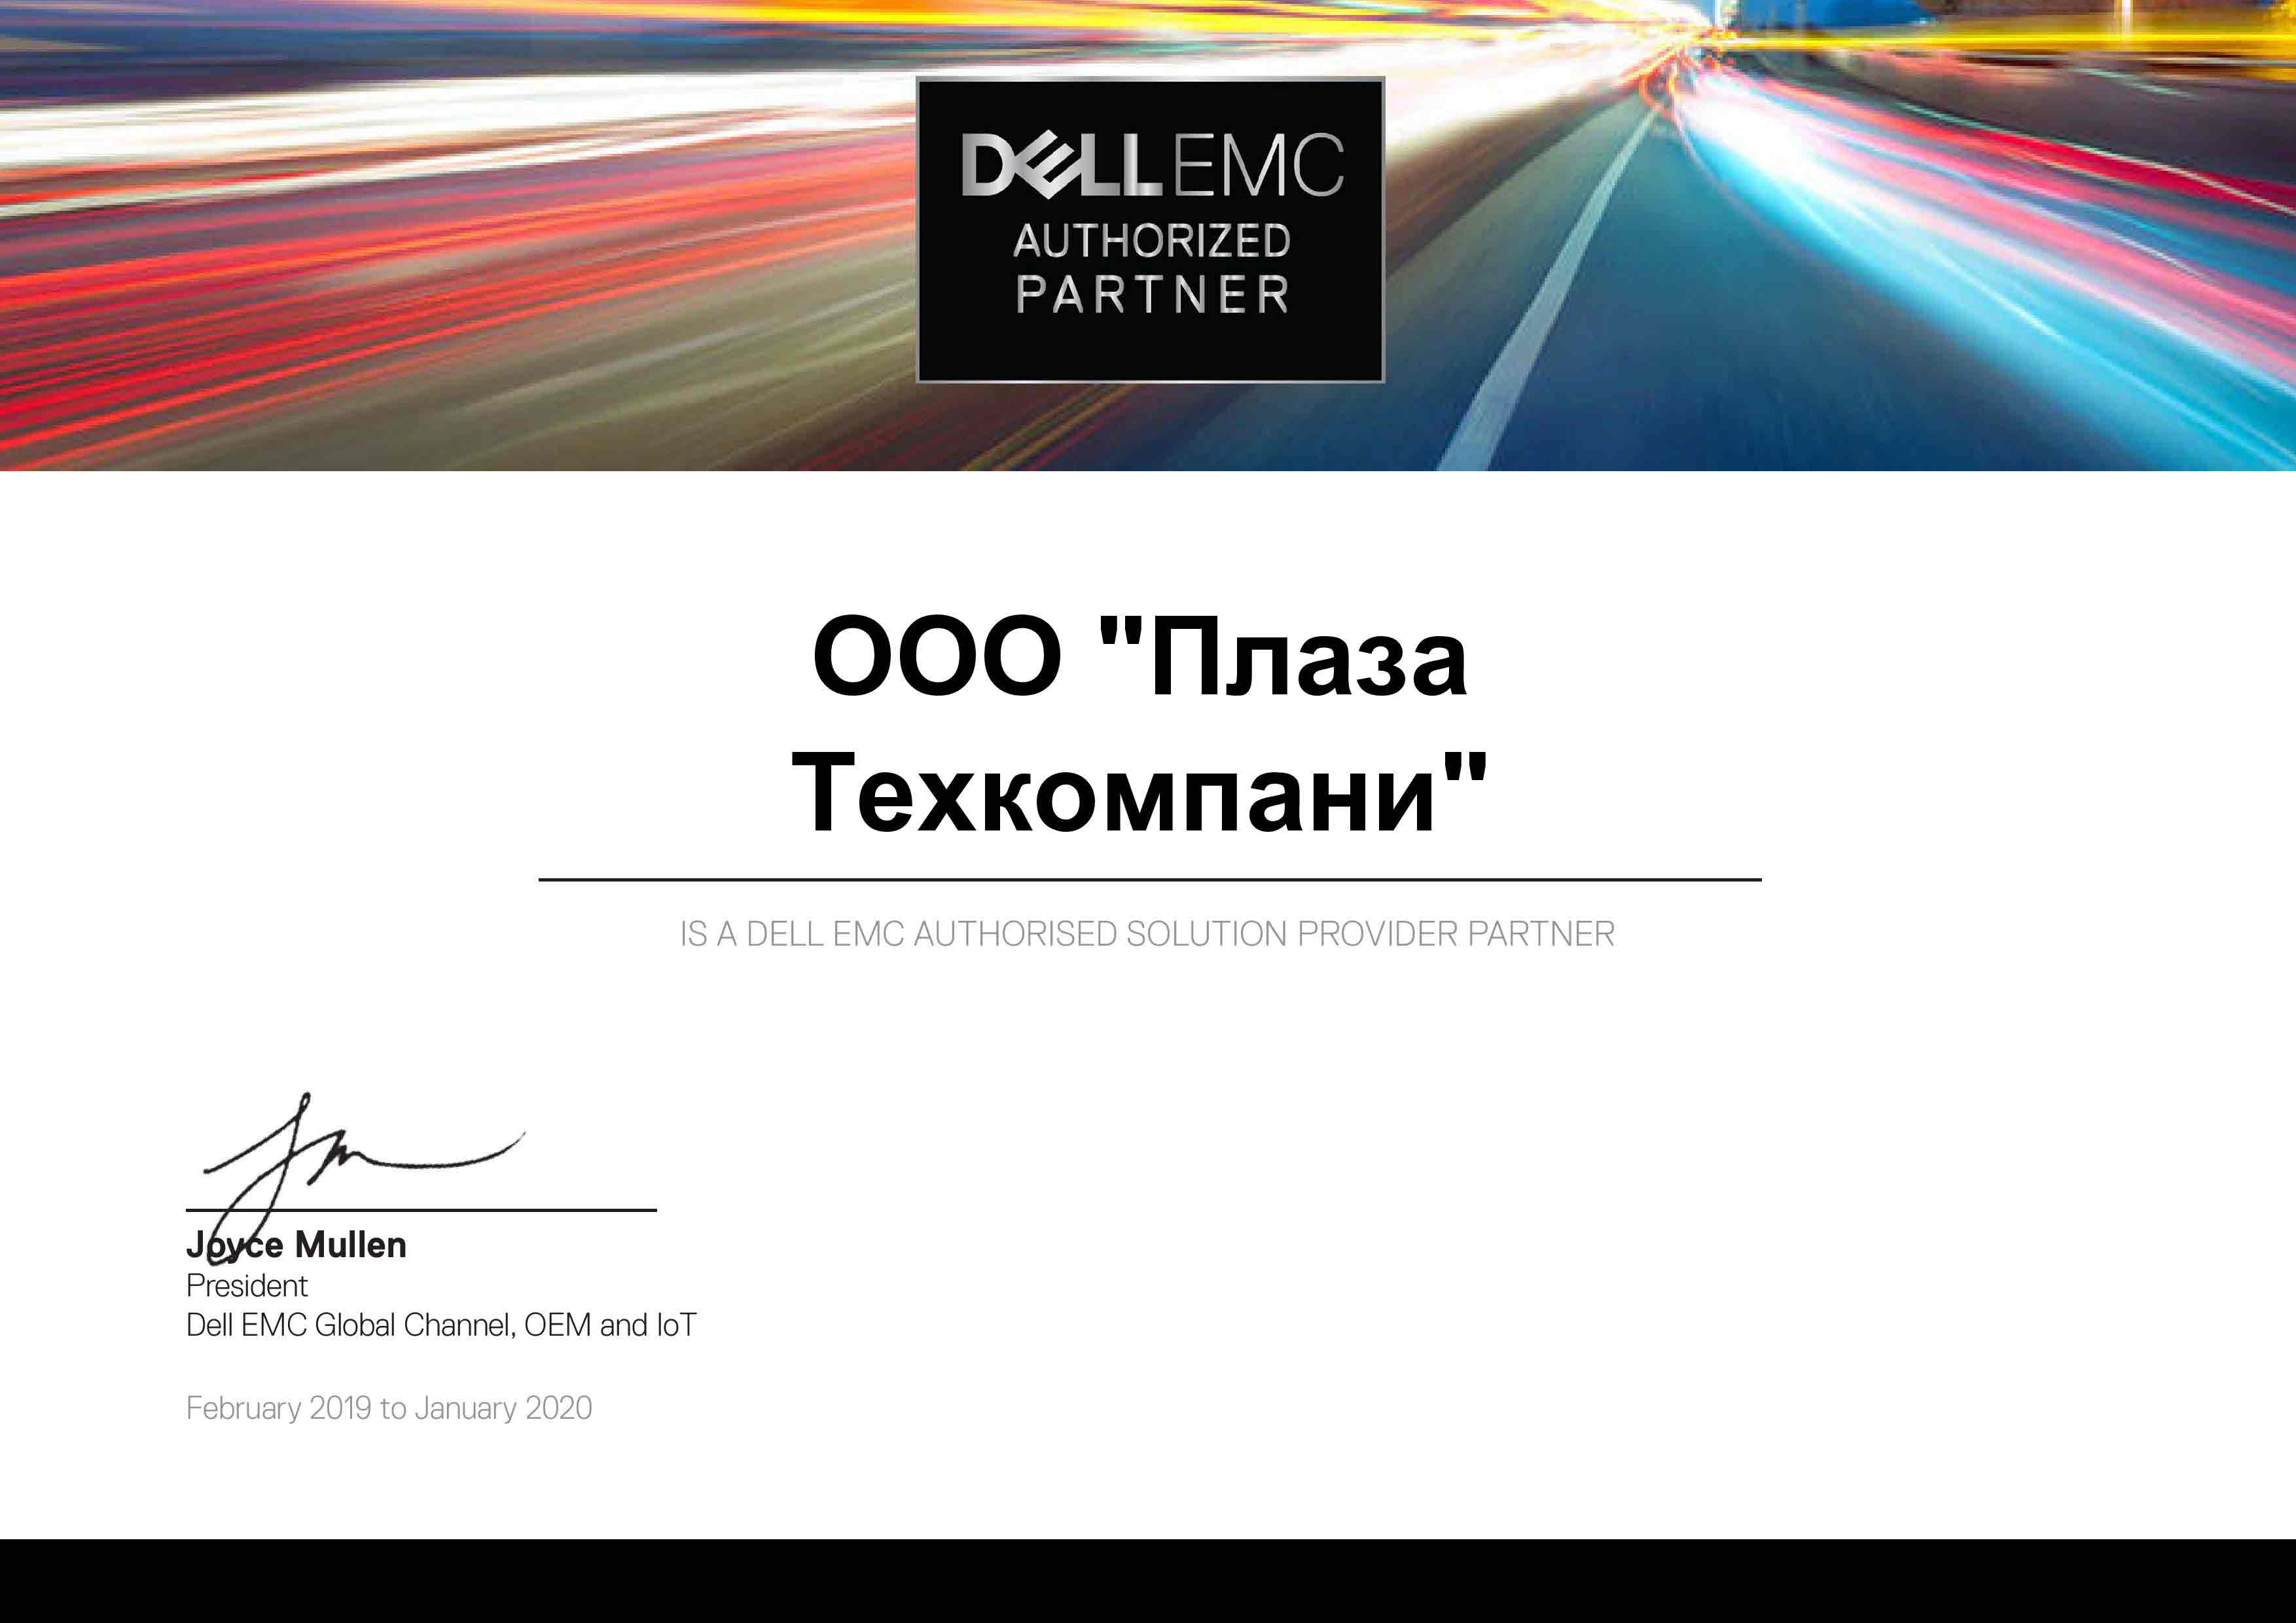 Компания ит | Официальные компании Dell Dell EMC Partner Certificate 2019 - 2020 Registered AUTHORIZED RESELLER LETTER